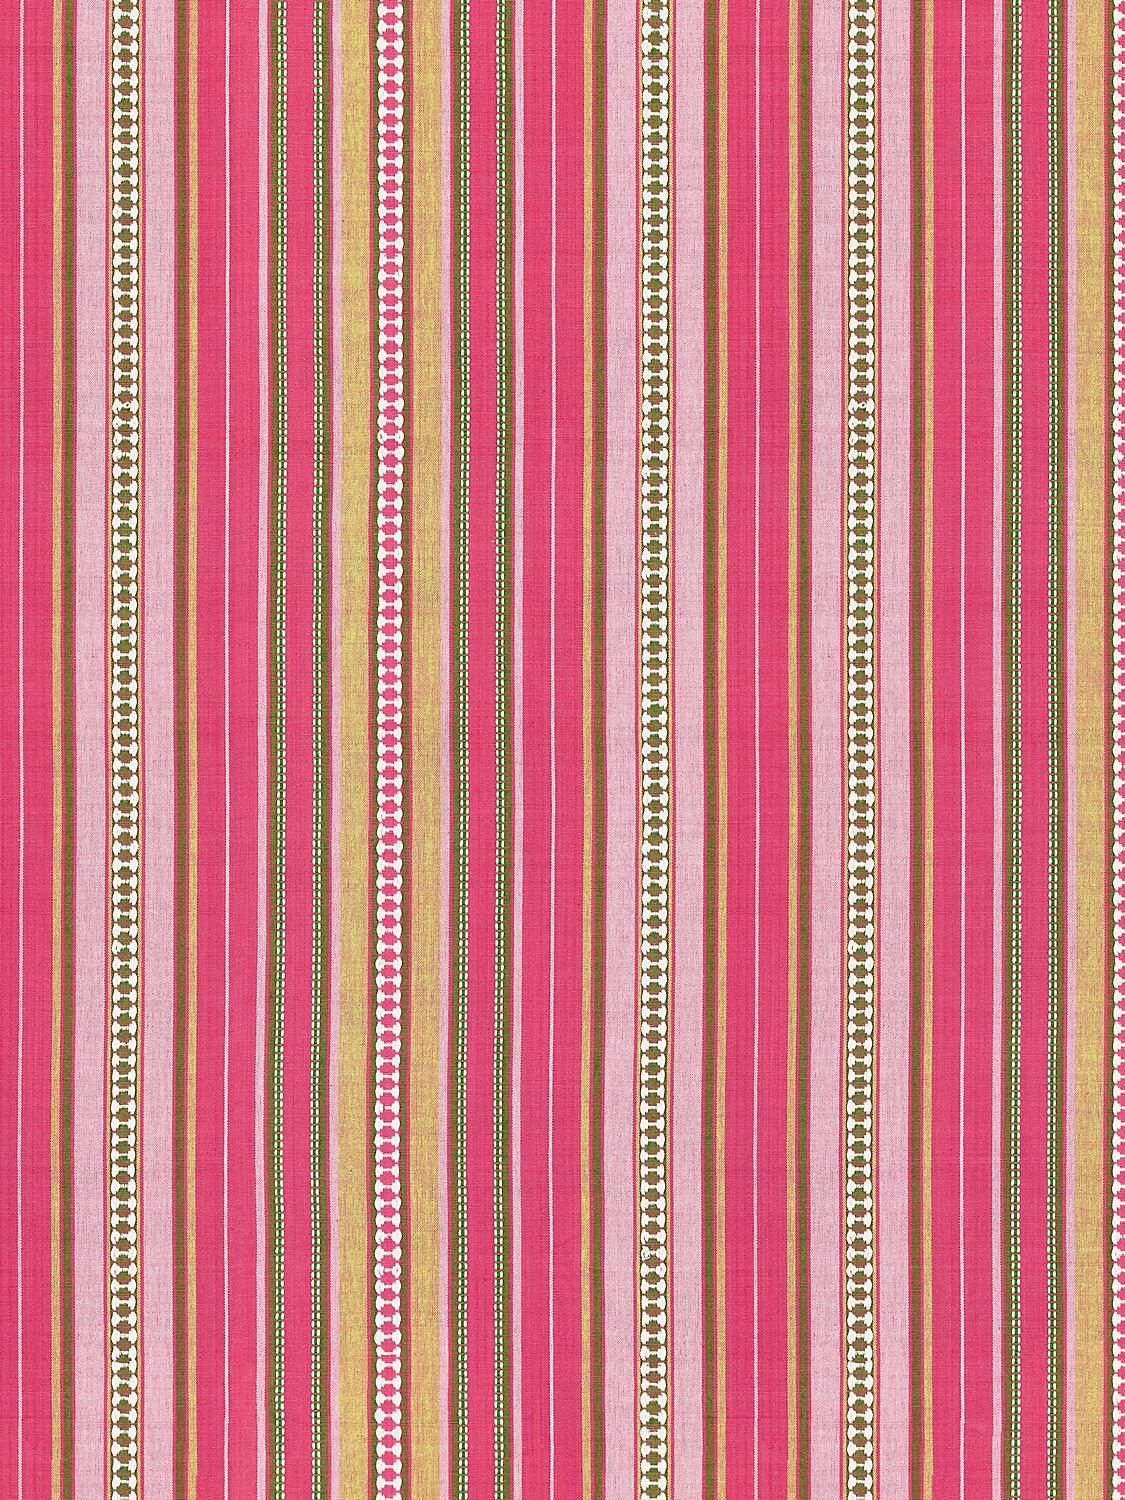 NILE STRIPE ROSE GARDEN - Atlanta Fabrics